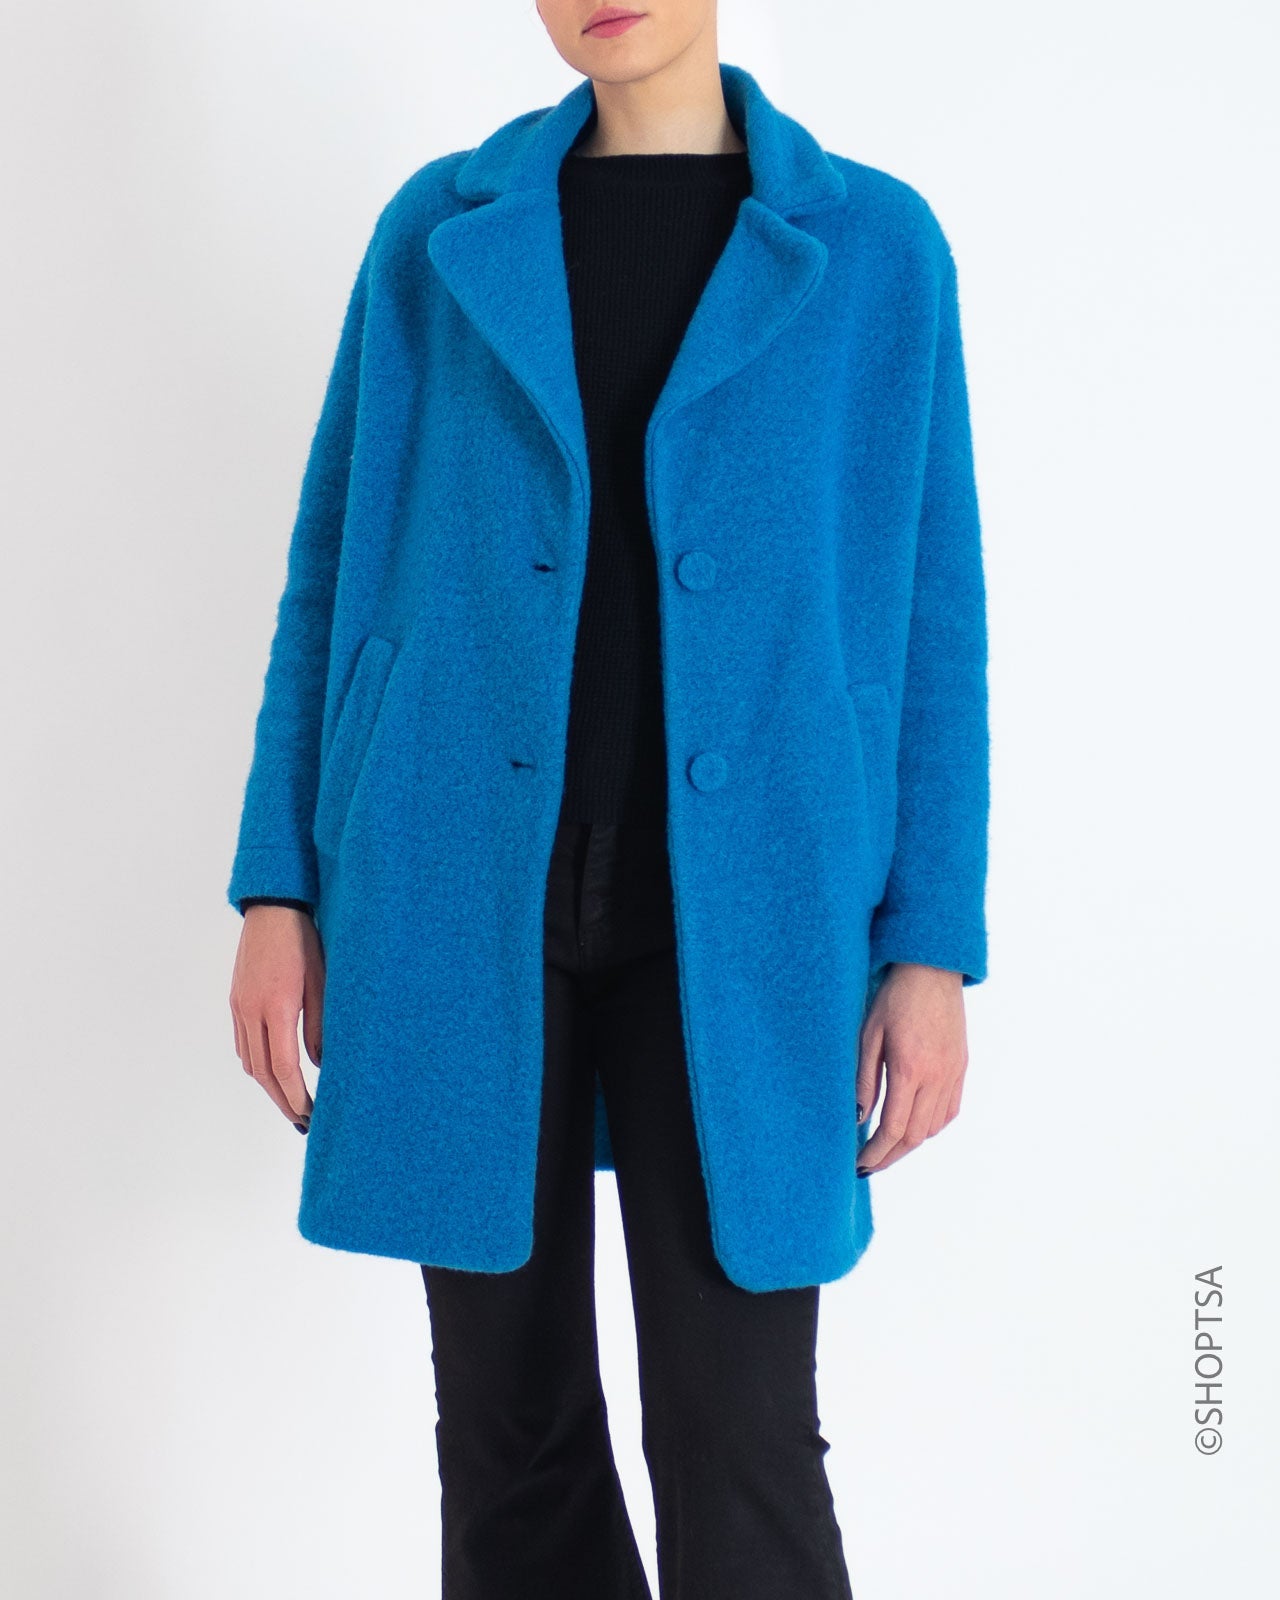 Colorful wool coat - RAGNO